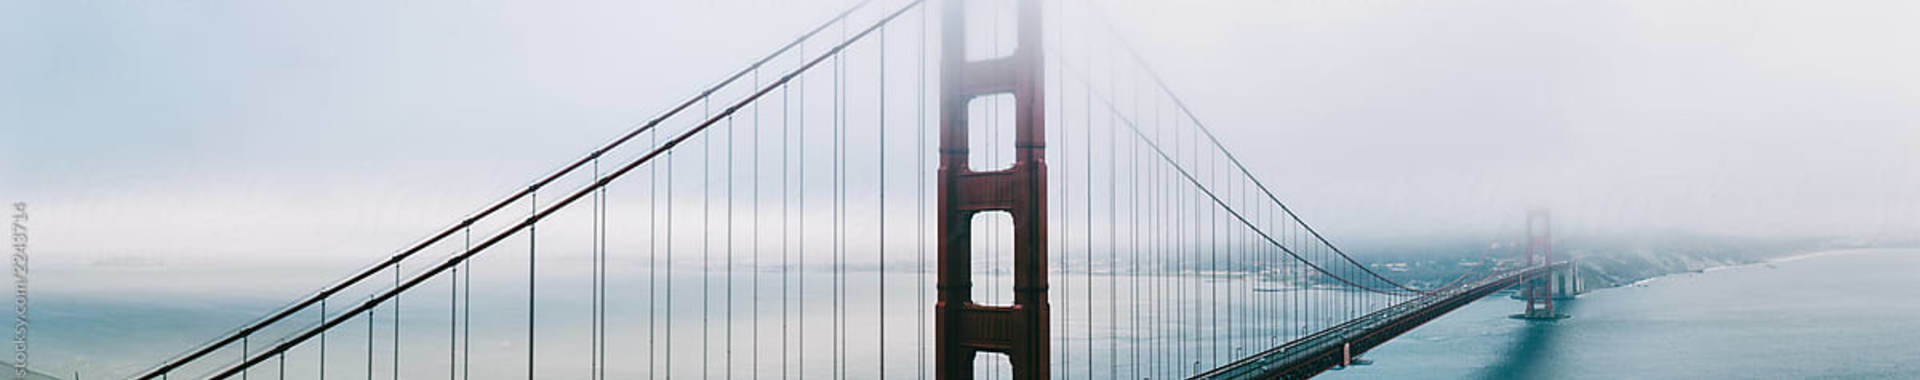 Foggy view of the San Francisco bridge